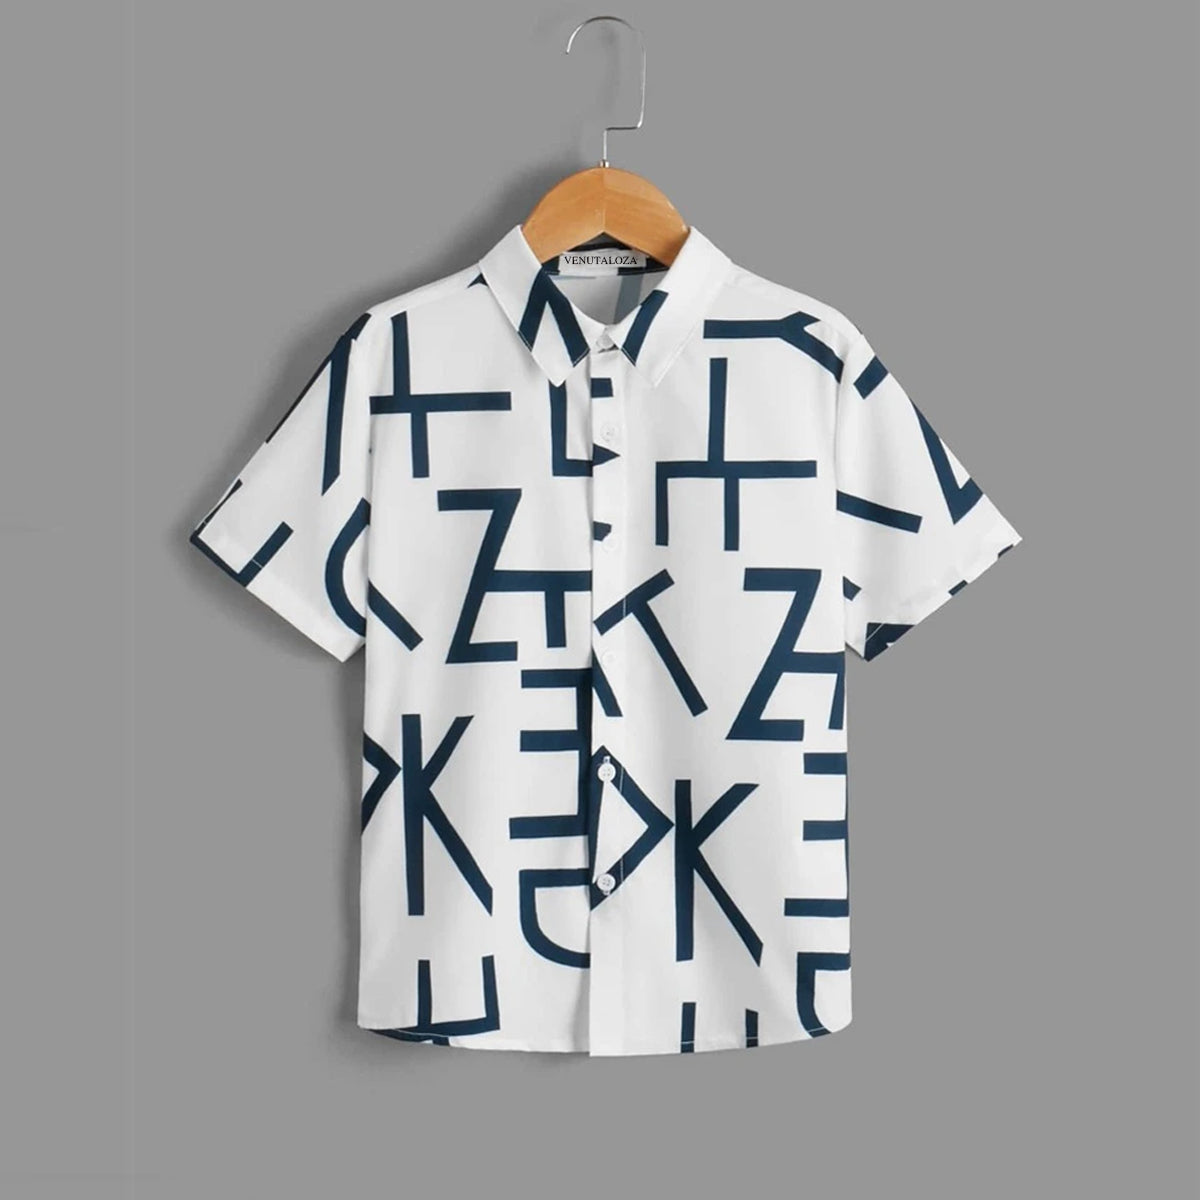 Venutaloza Boys All Letter Graphic Colorblock Shirt For Boy.